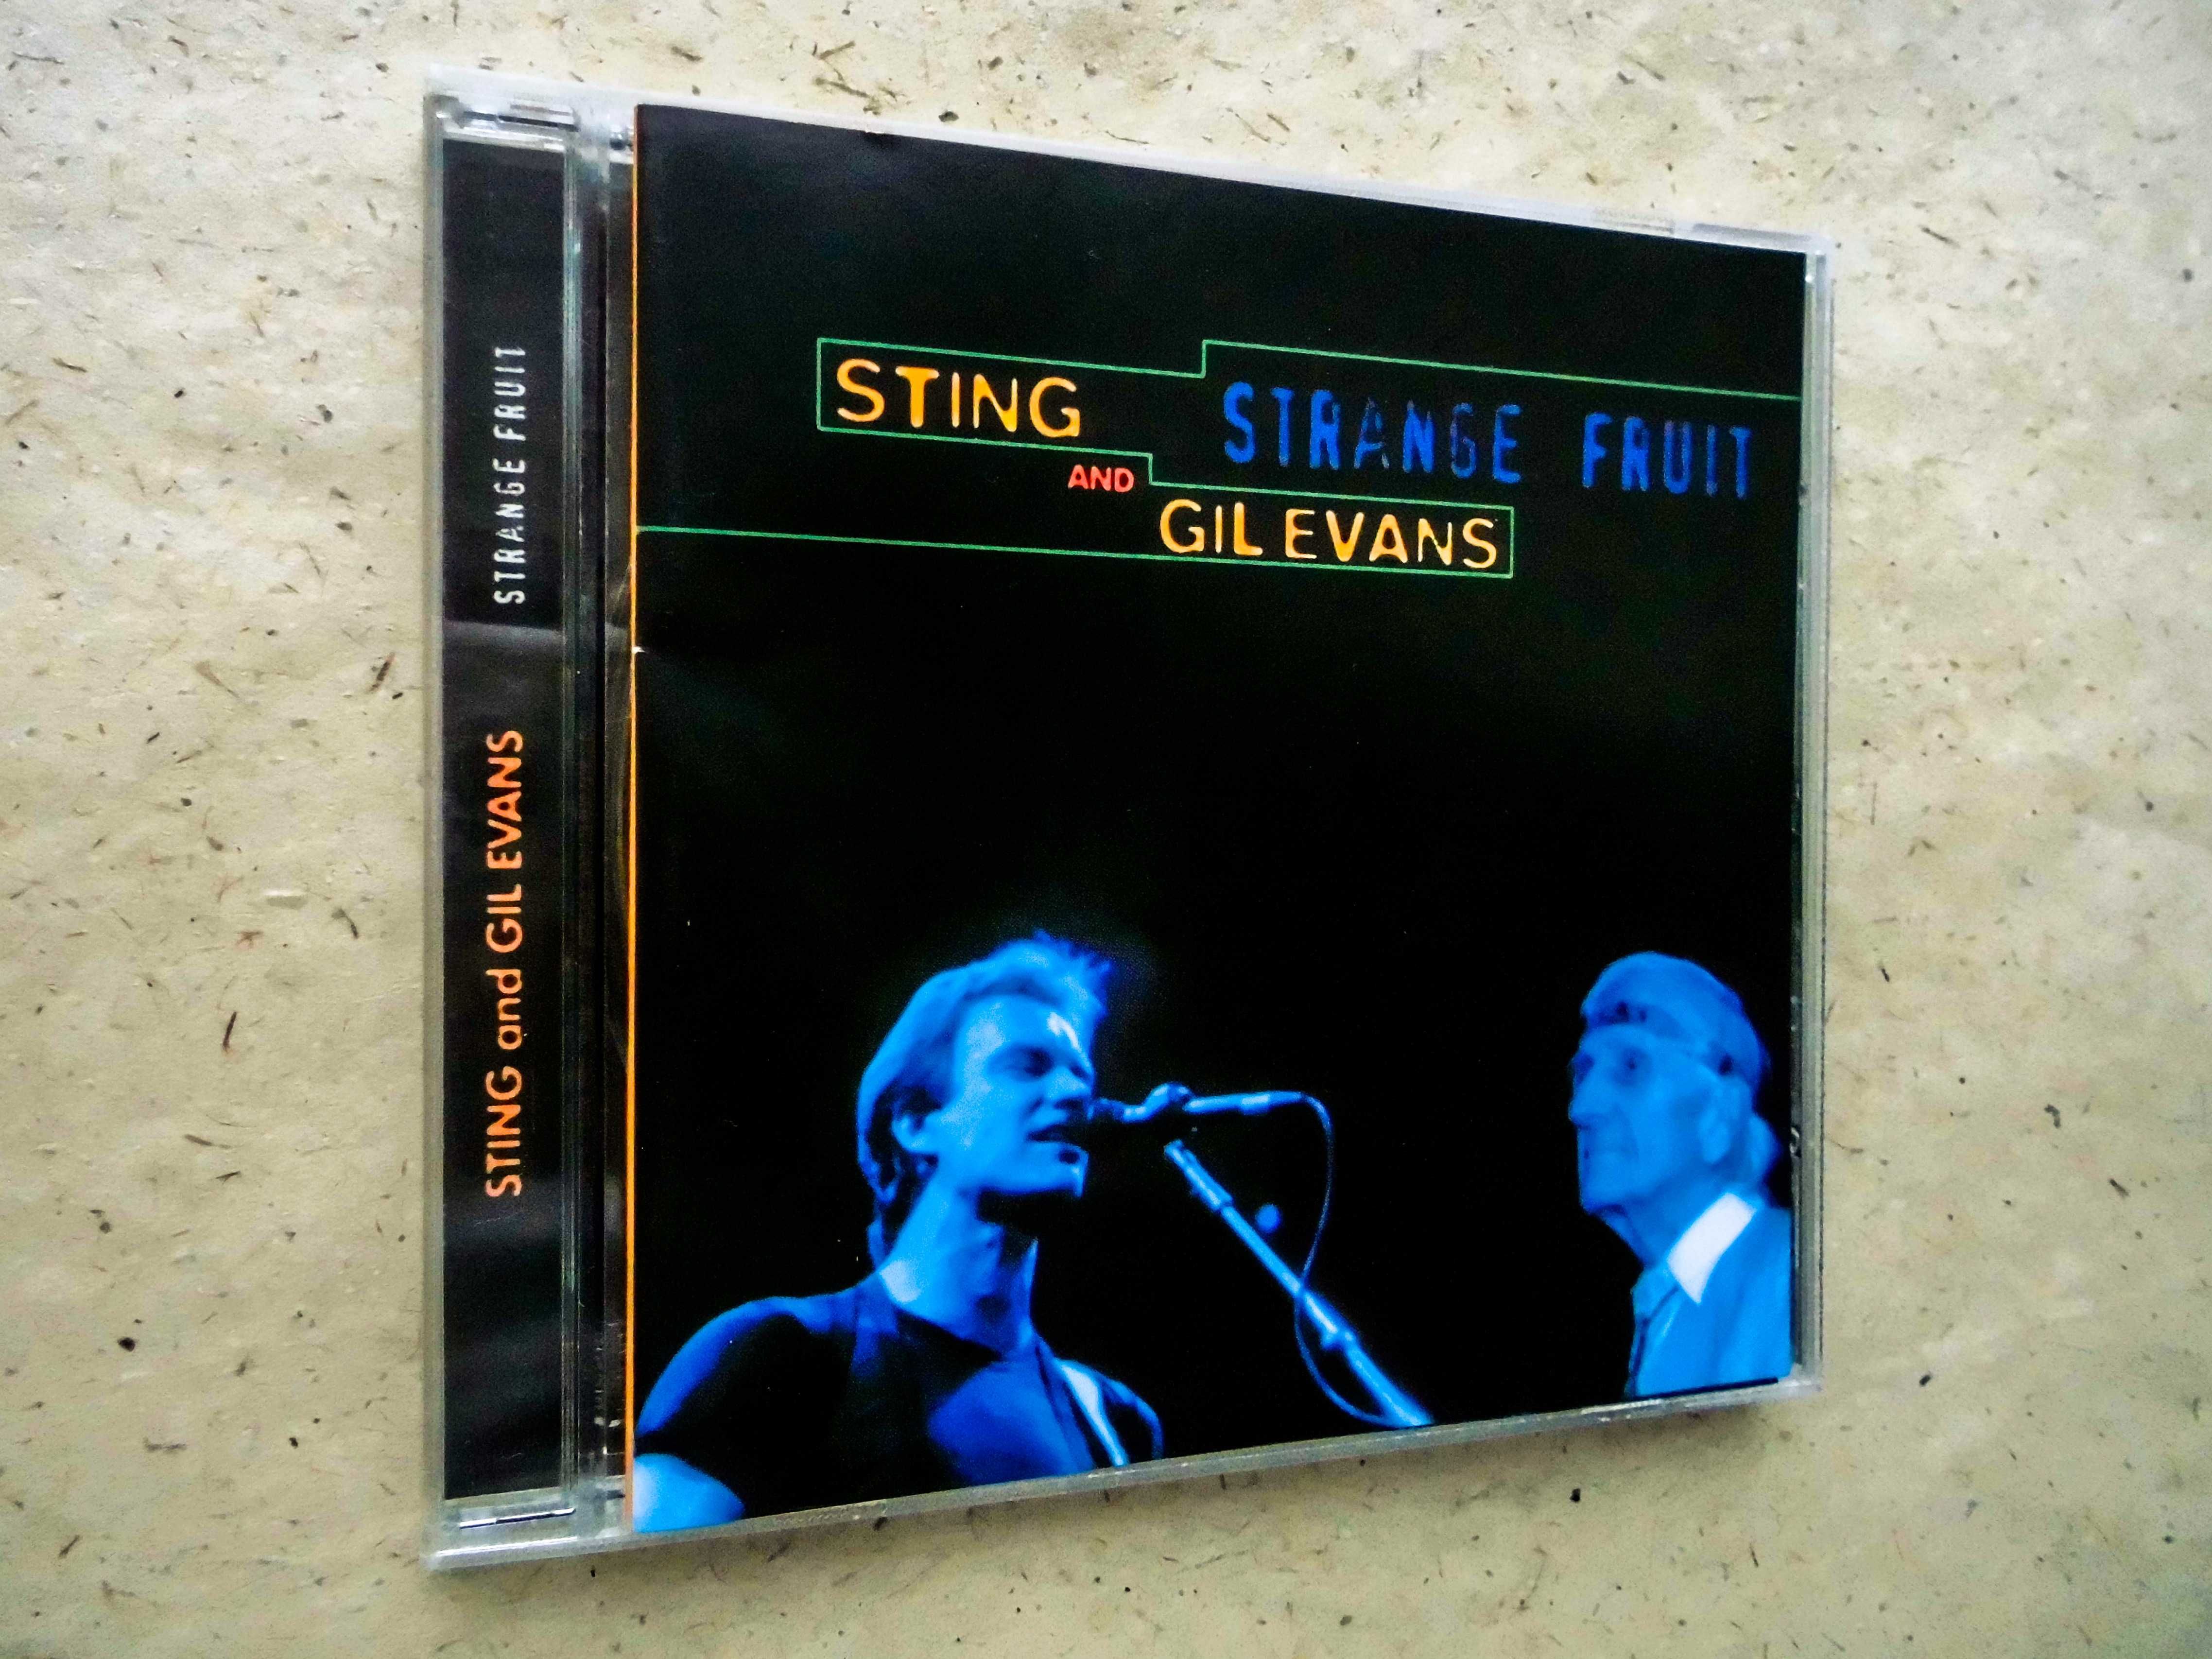 CD диск Sting and Gil Evans - Strange Fruit